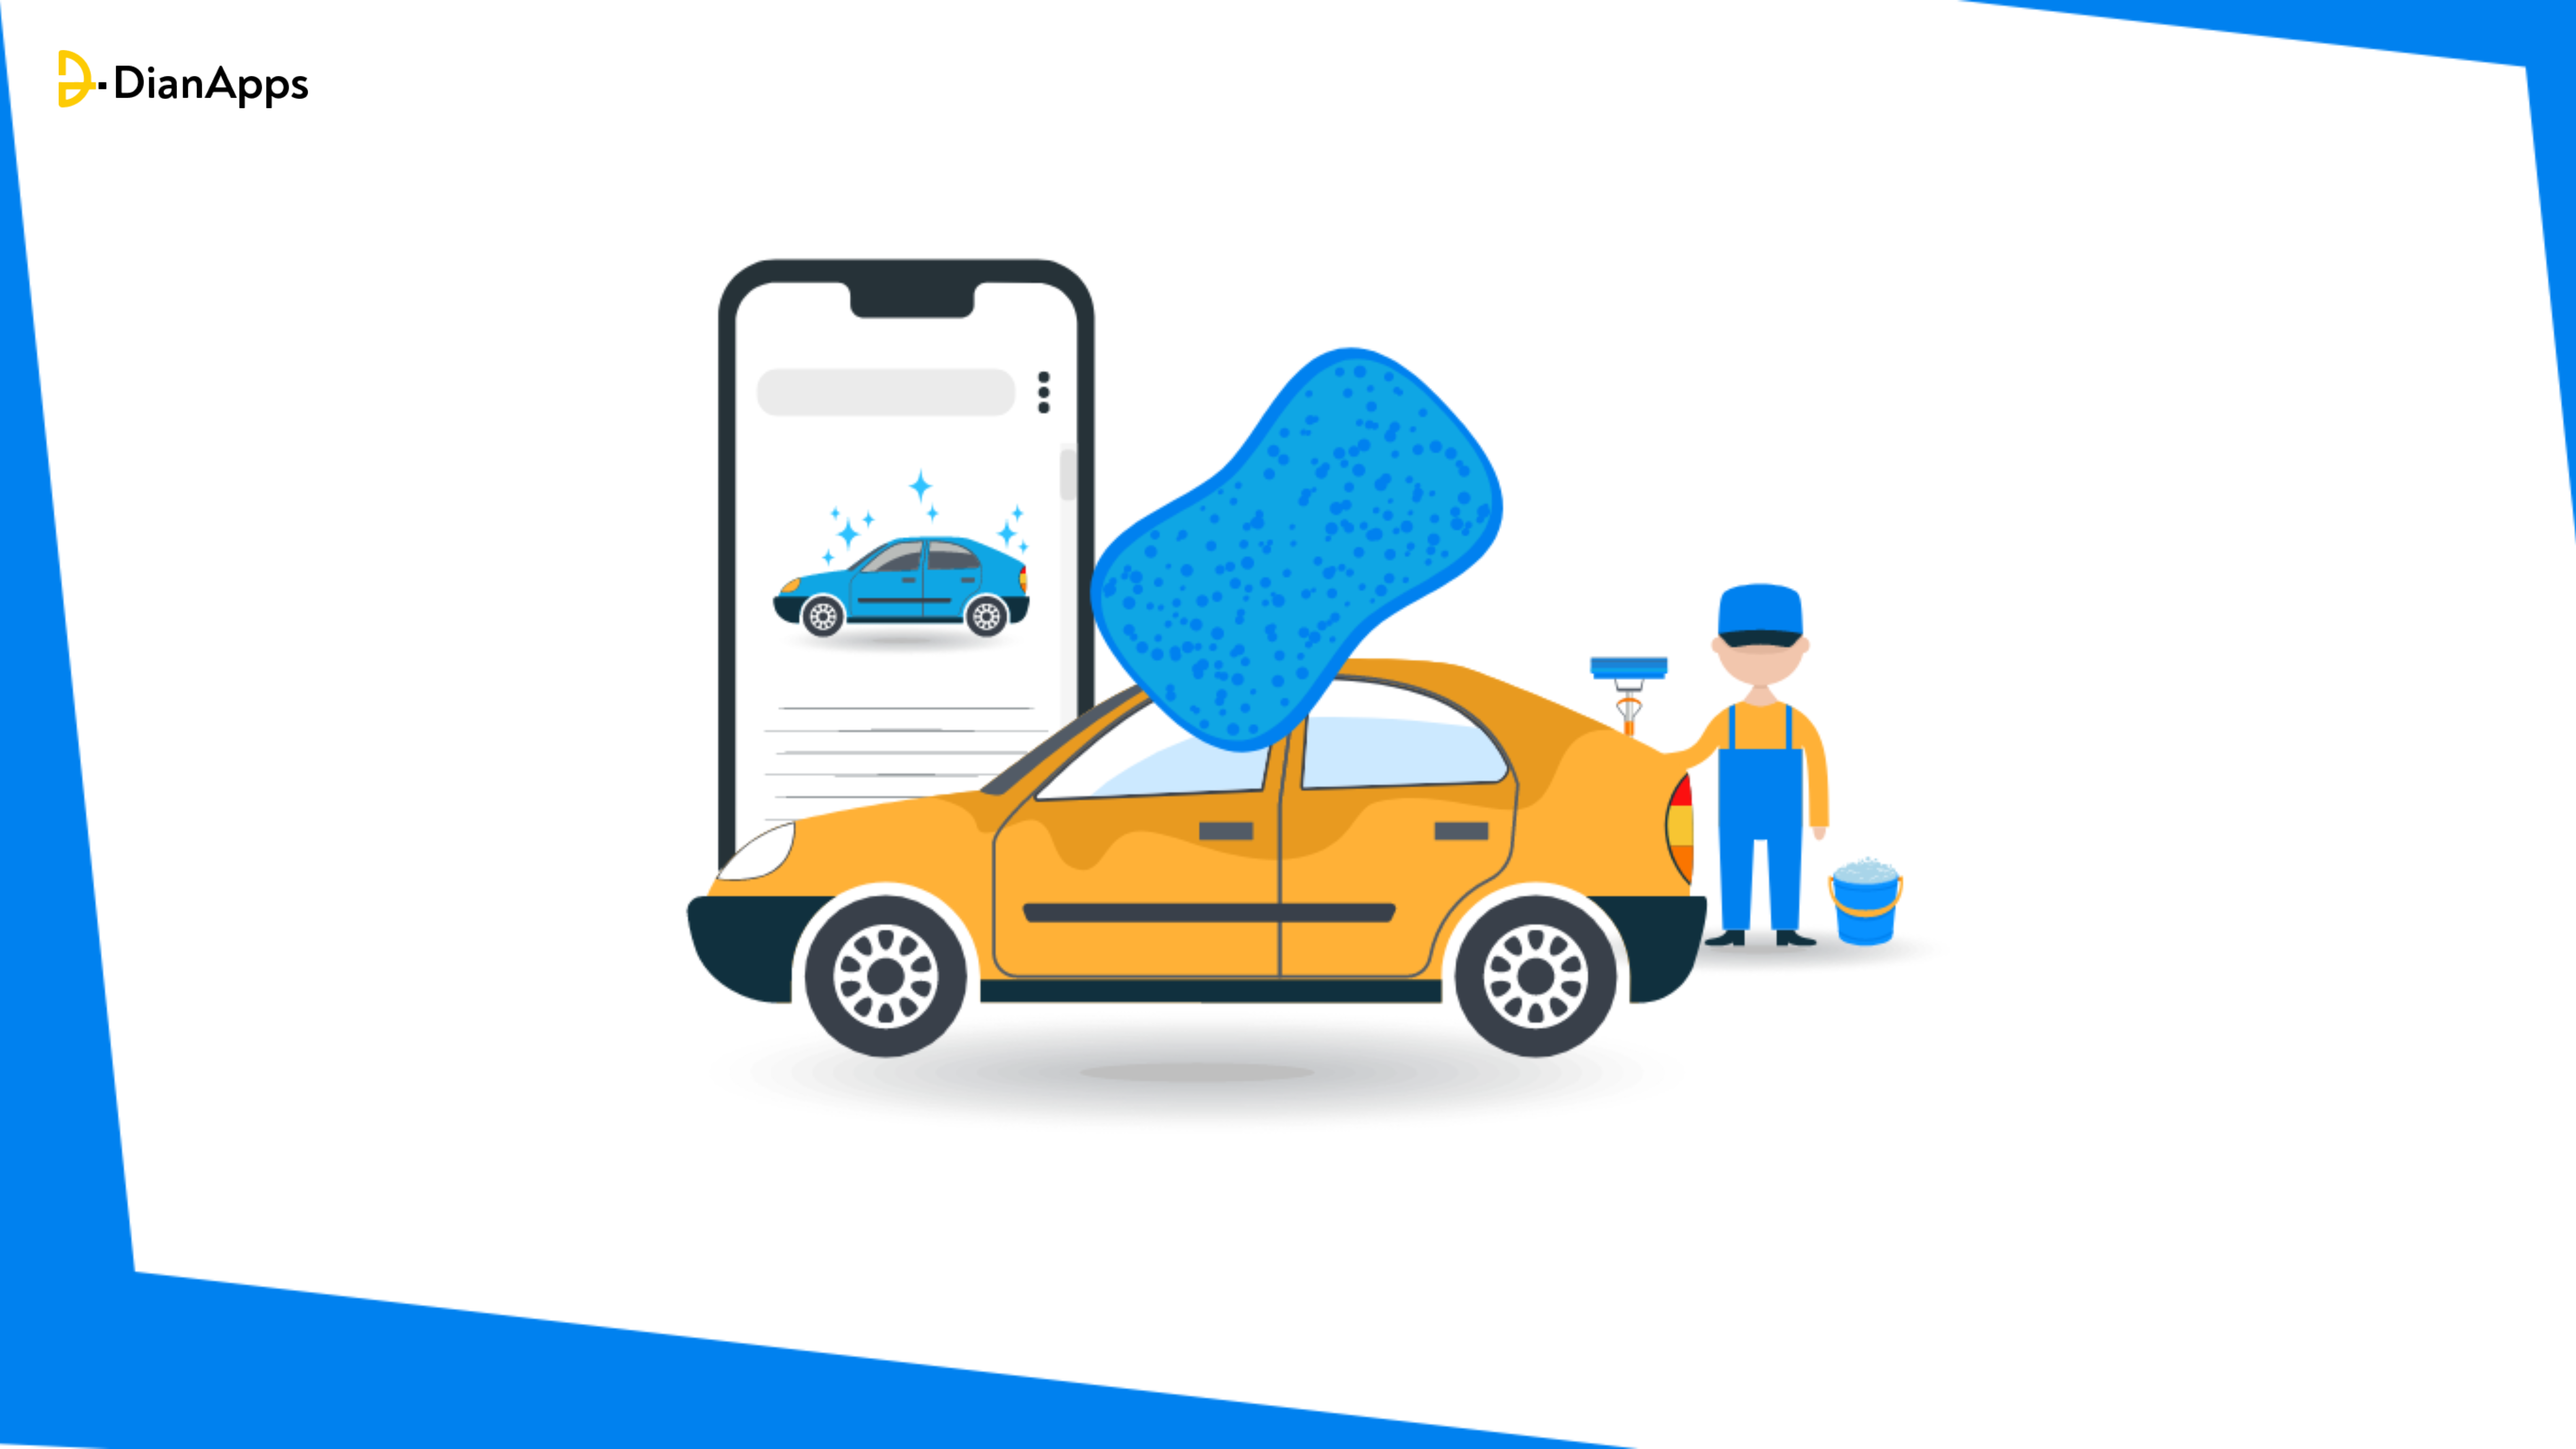 On-Demand Car Wash App Development